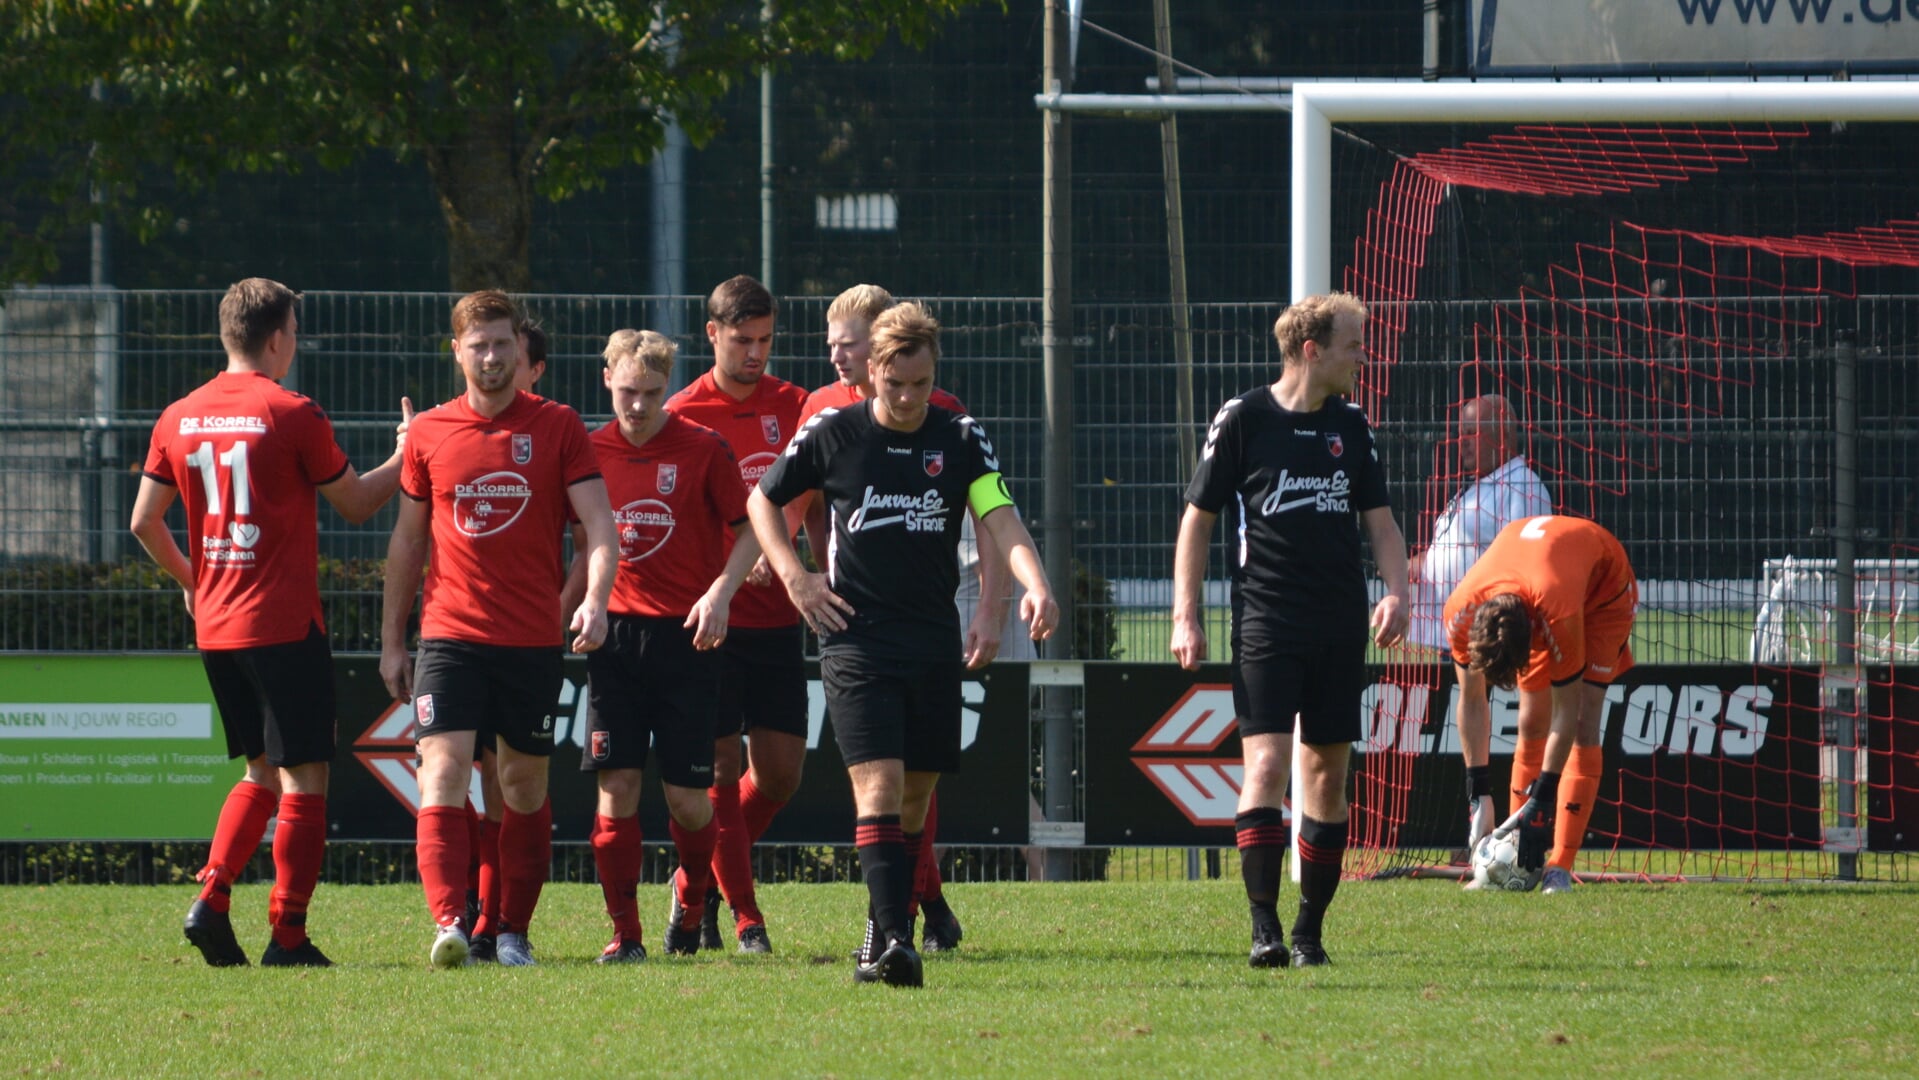 Terschuurse Boys (archief) won met 2-0 bij DFS Opheusden.